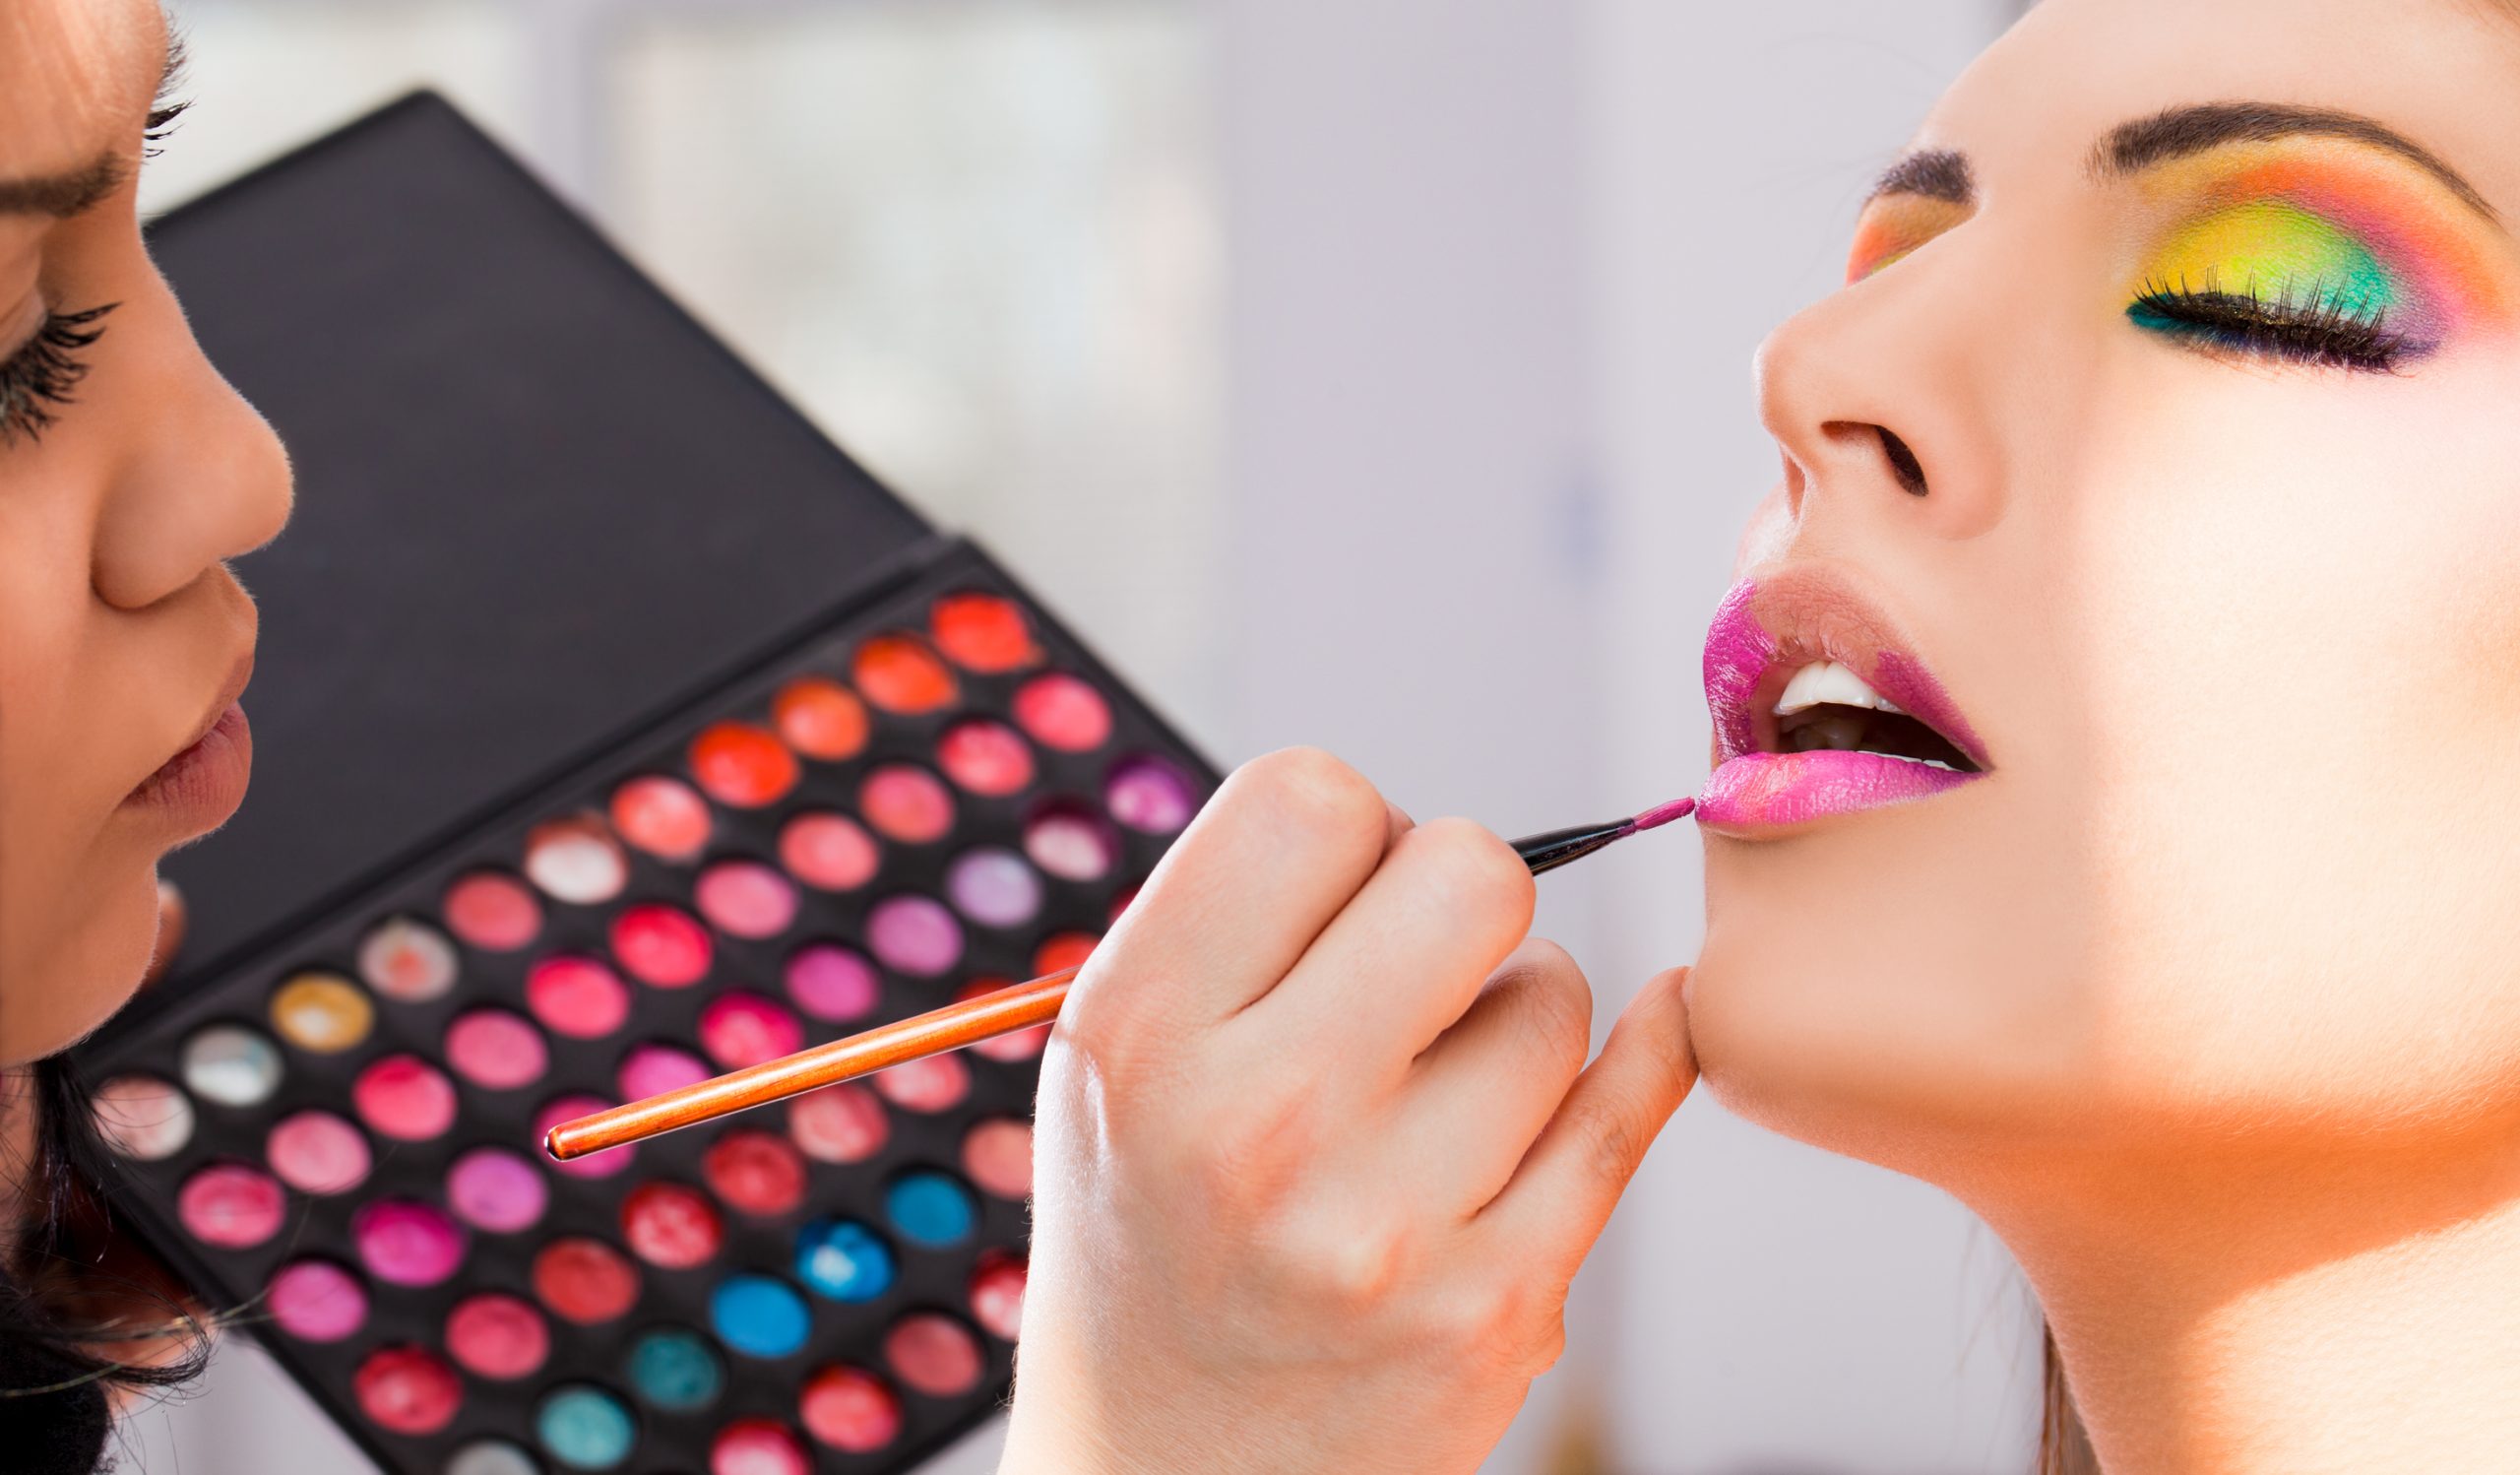 The Best Guide To Hiring An Innovation Makeup Artist